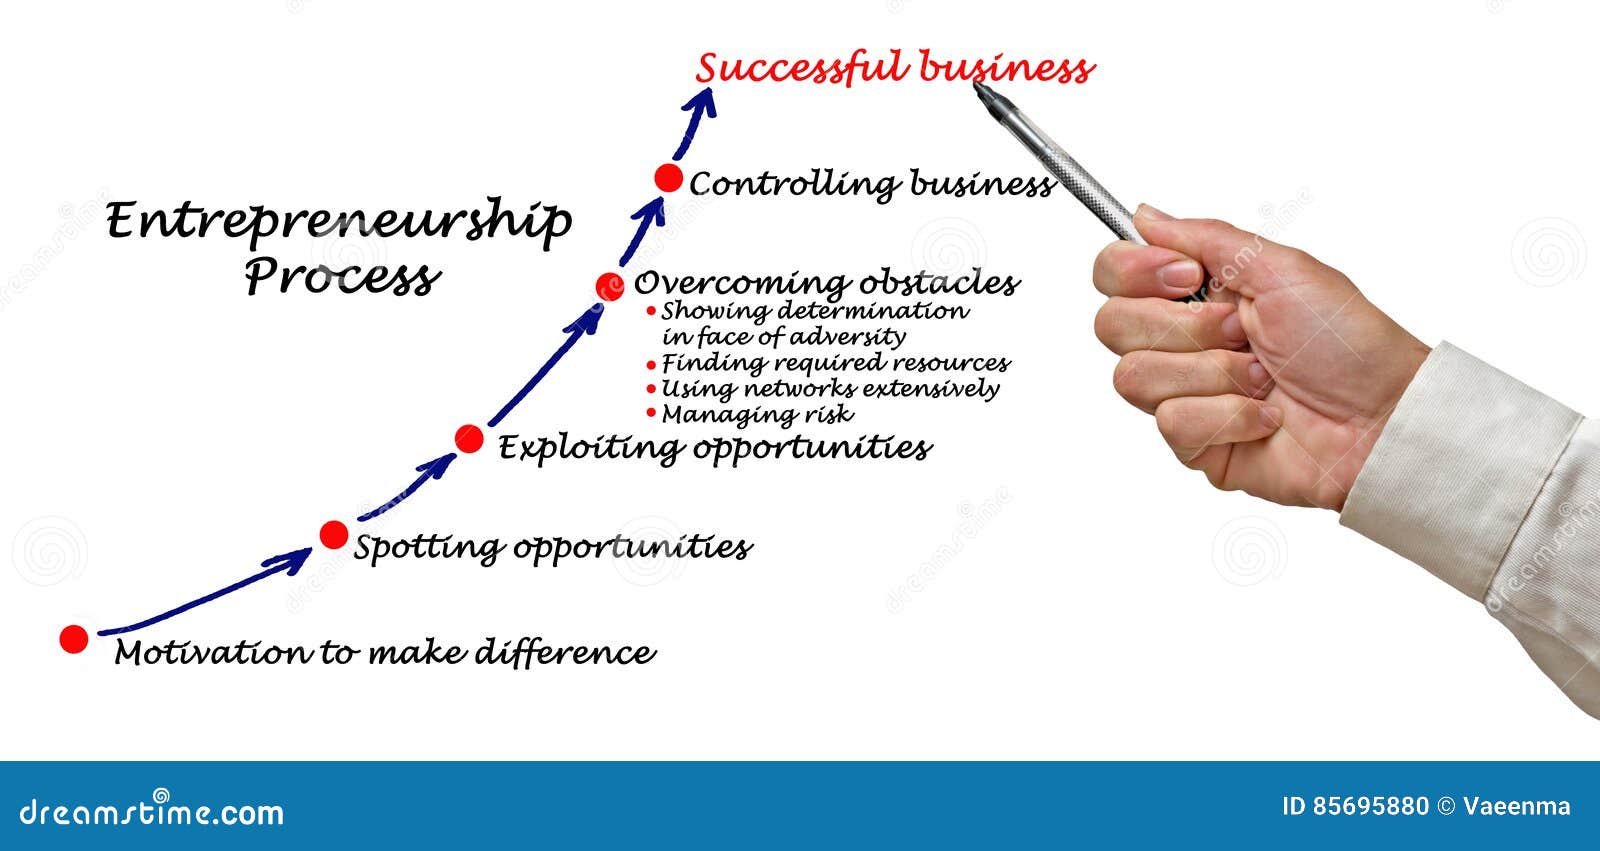 business plan process in entrepreneurship